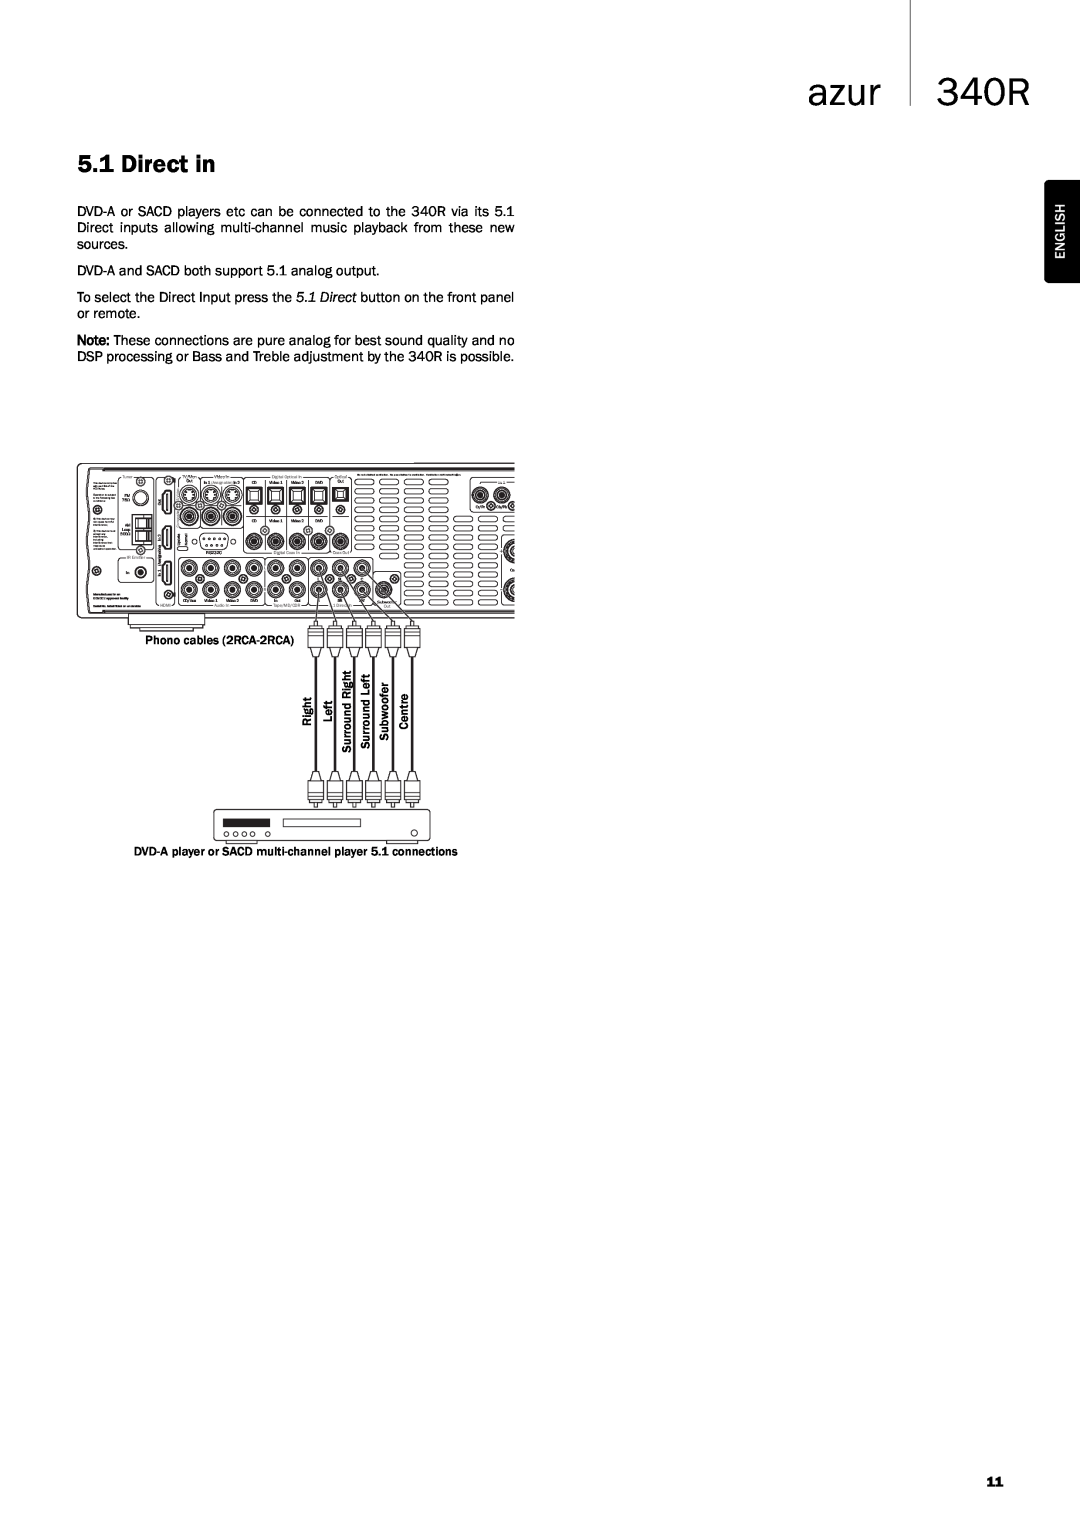 Cambridge Audio 340Razur user manual Direct in, azur 340R, English 